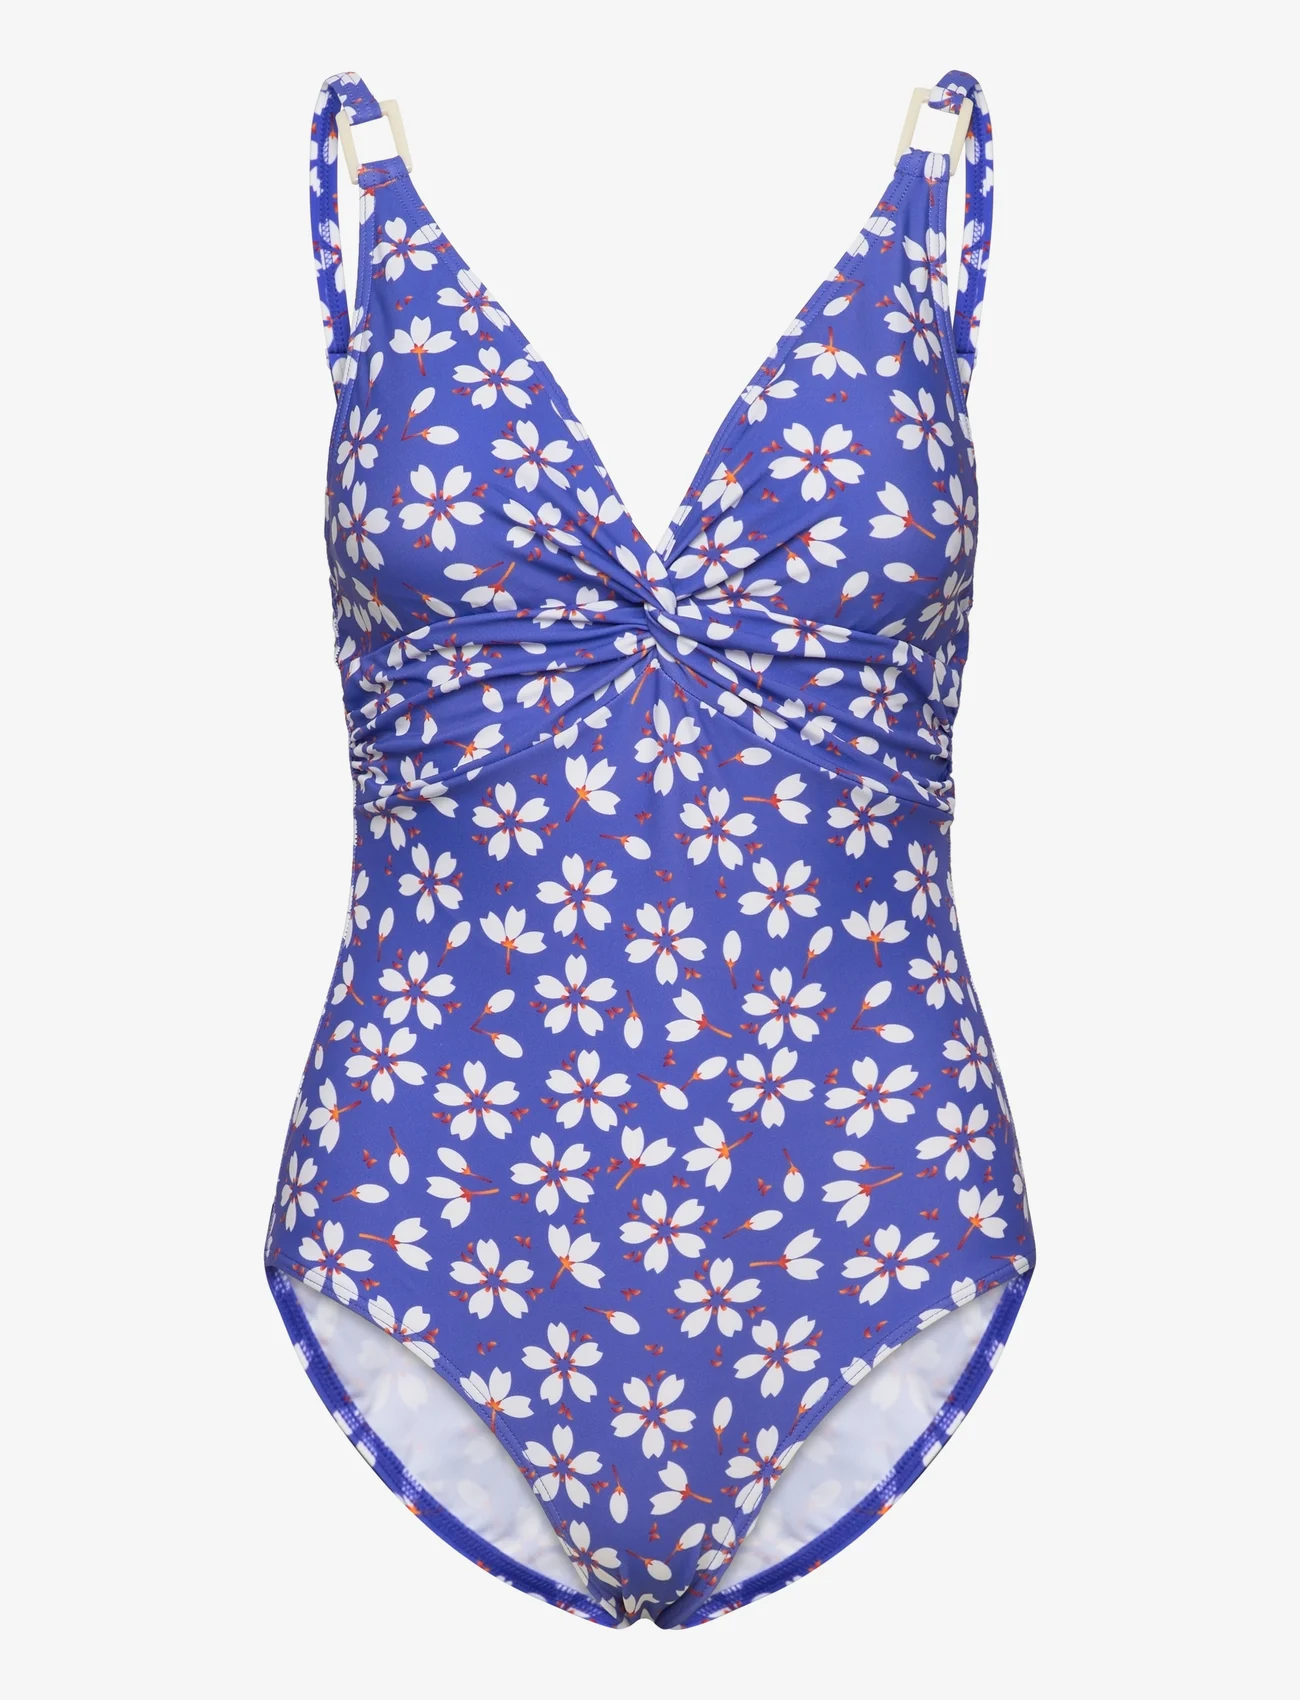 Missya - Lucca swimsuit - ujumistrikood - clear blue - 0